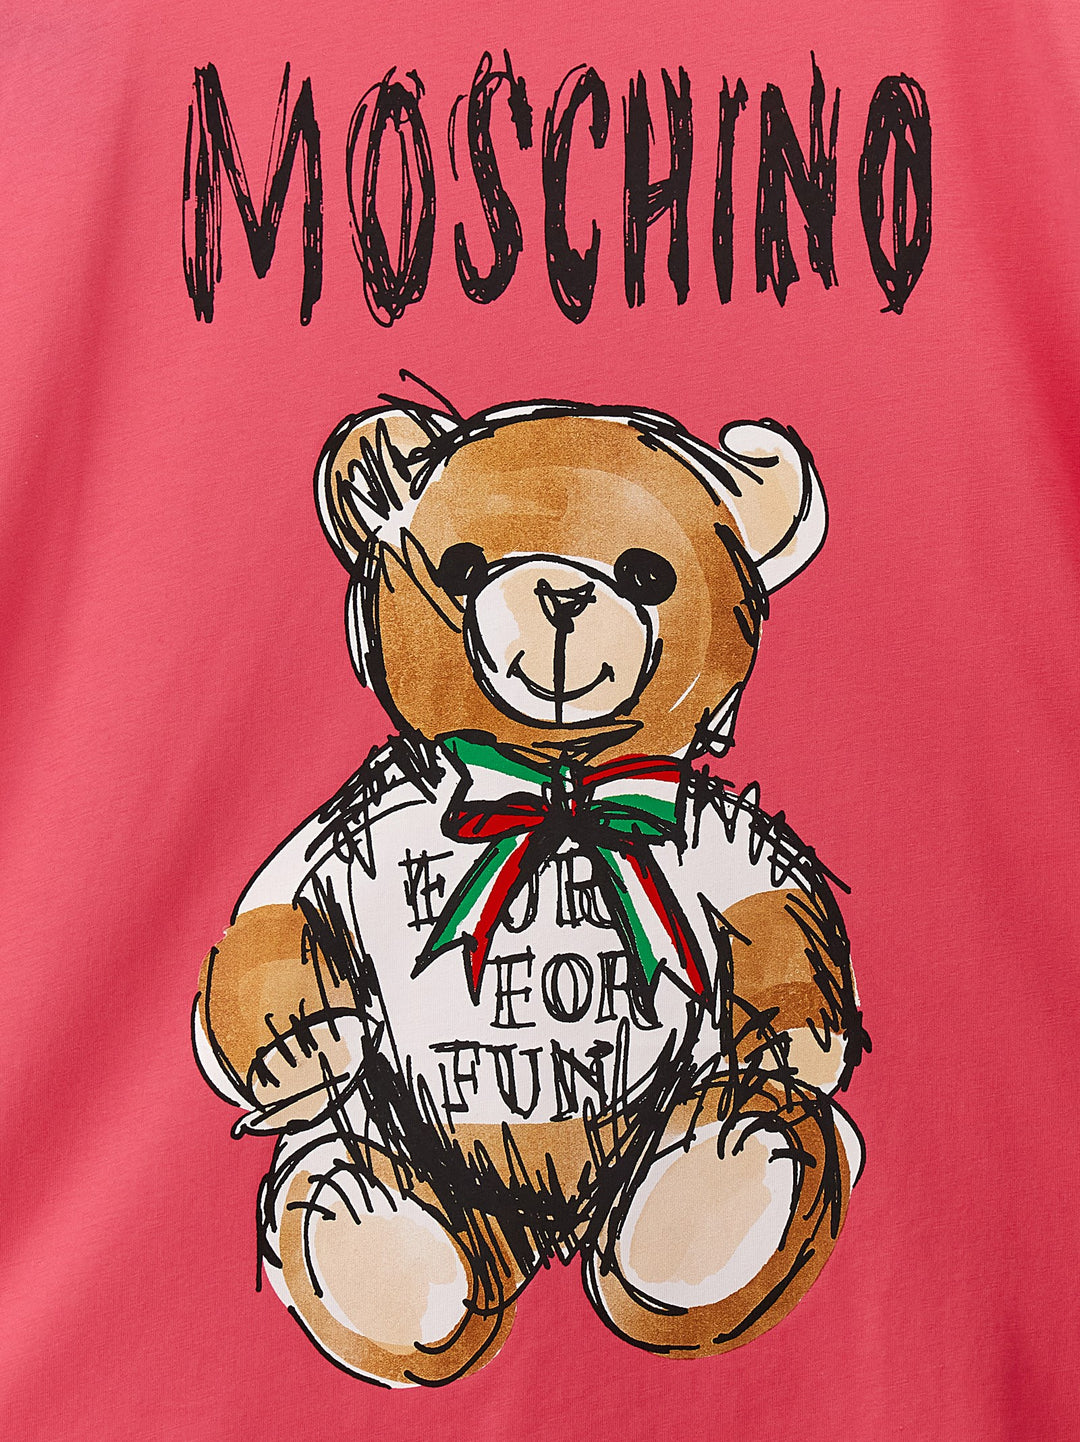 Teddy Bear T Shirt Fucsia